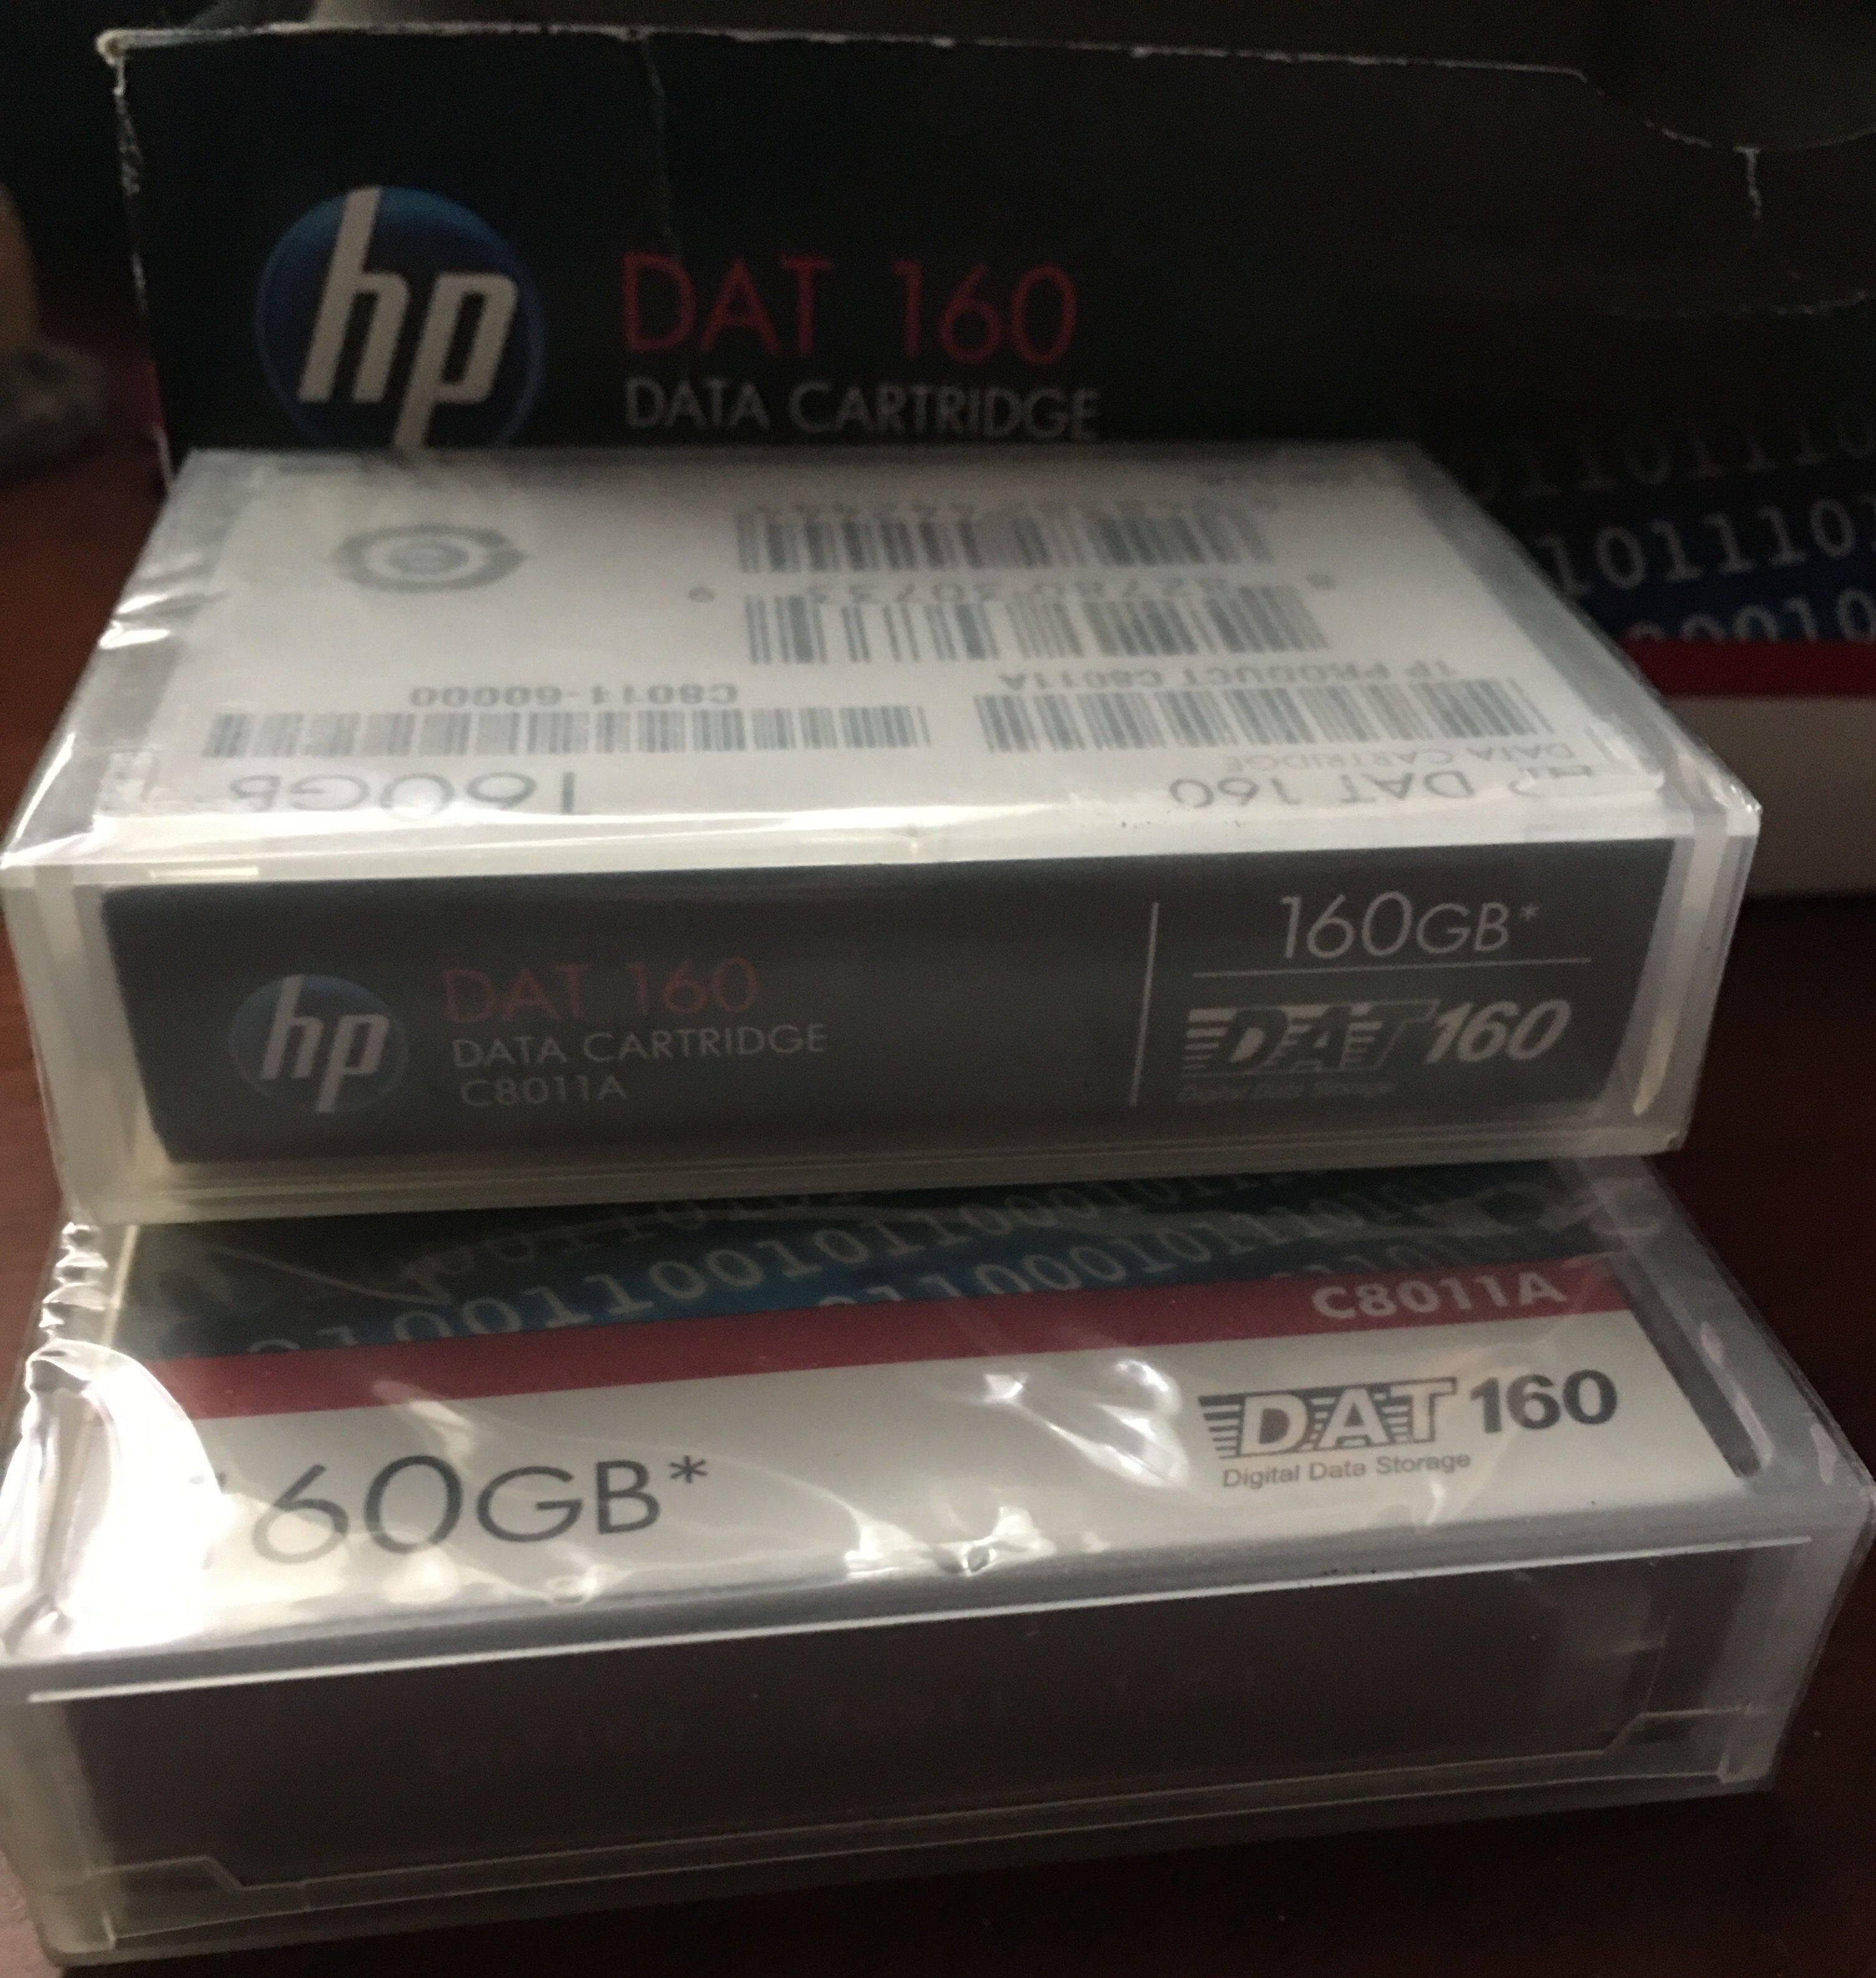 HP HEWC8011A DAT 160 Tape Cartridge 